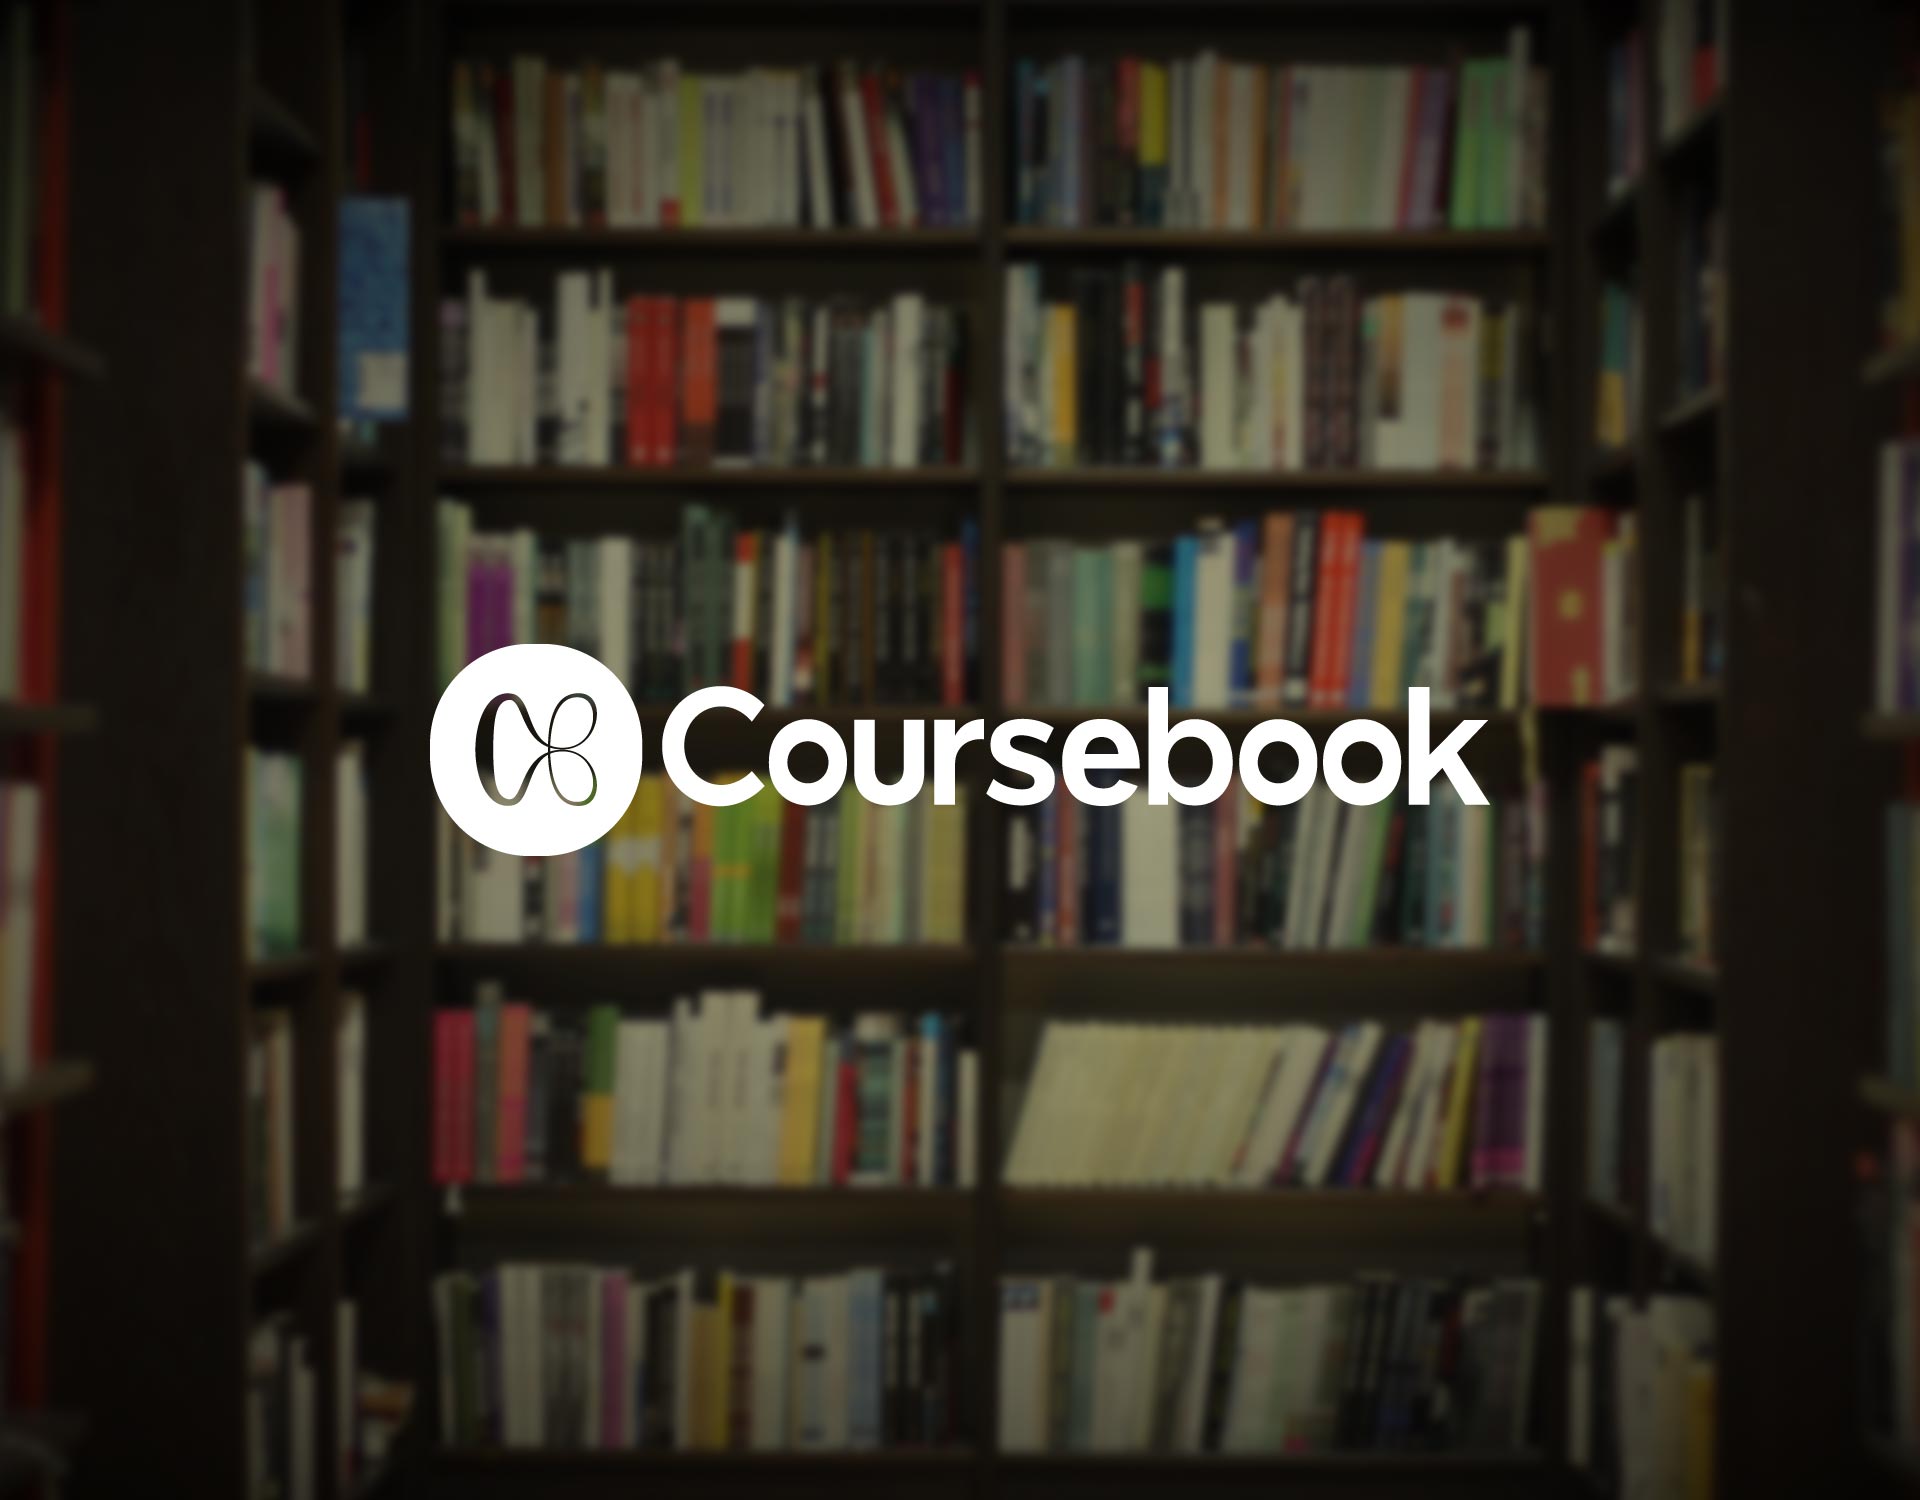 Coursebook – Brand Identity